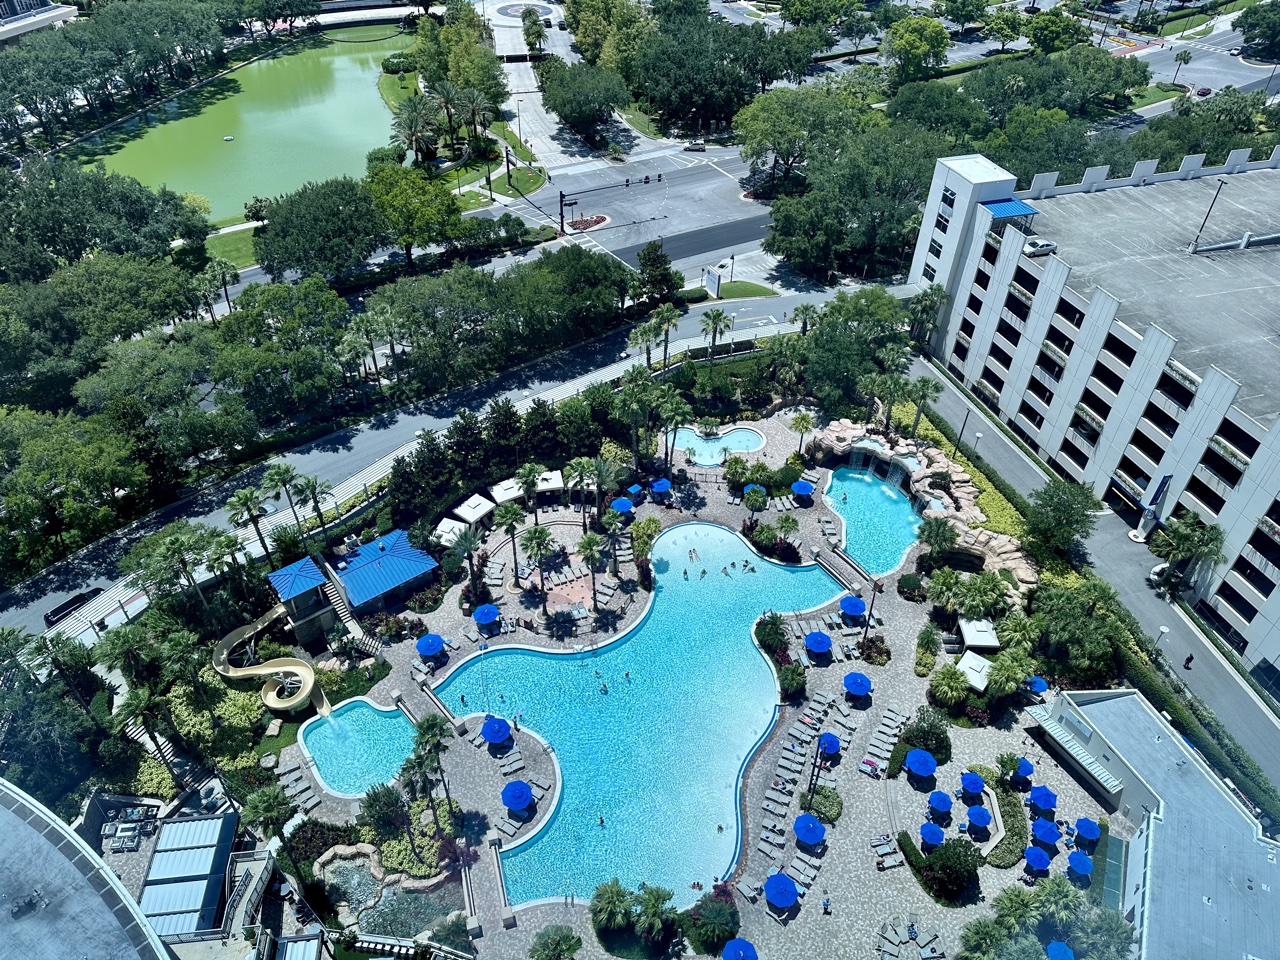 Hyatt Regency Orlando pool from above